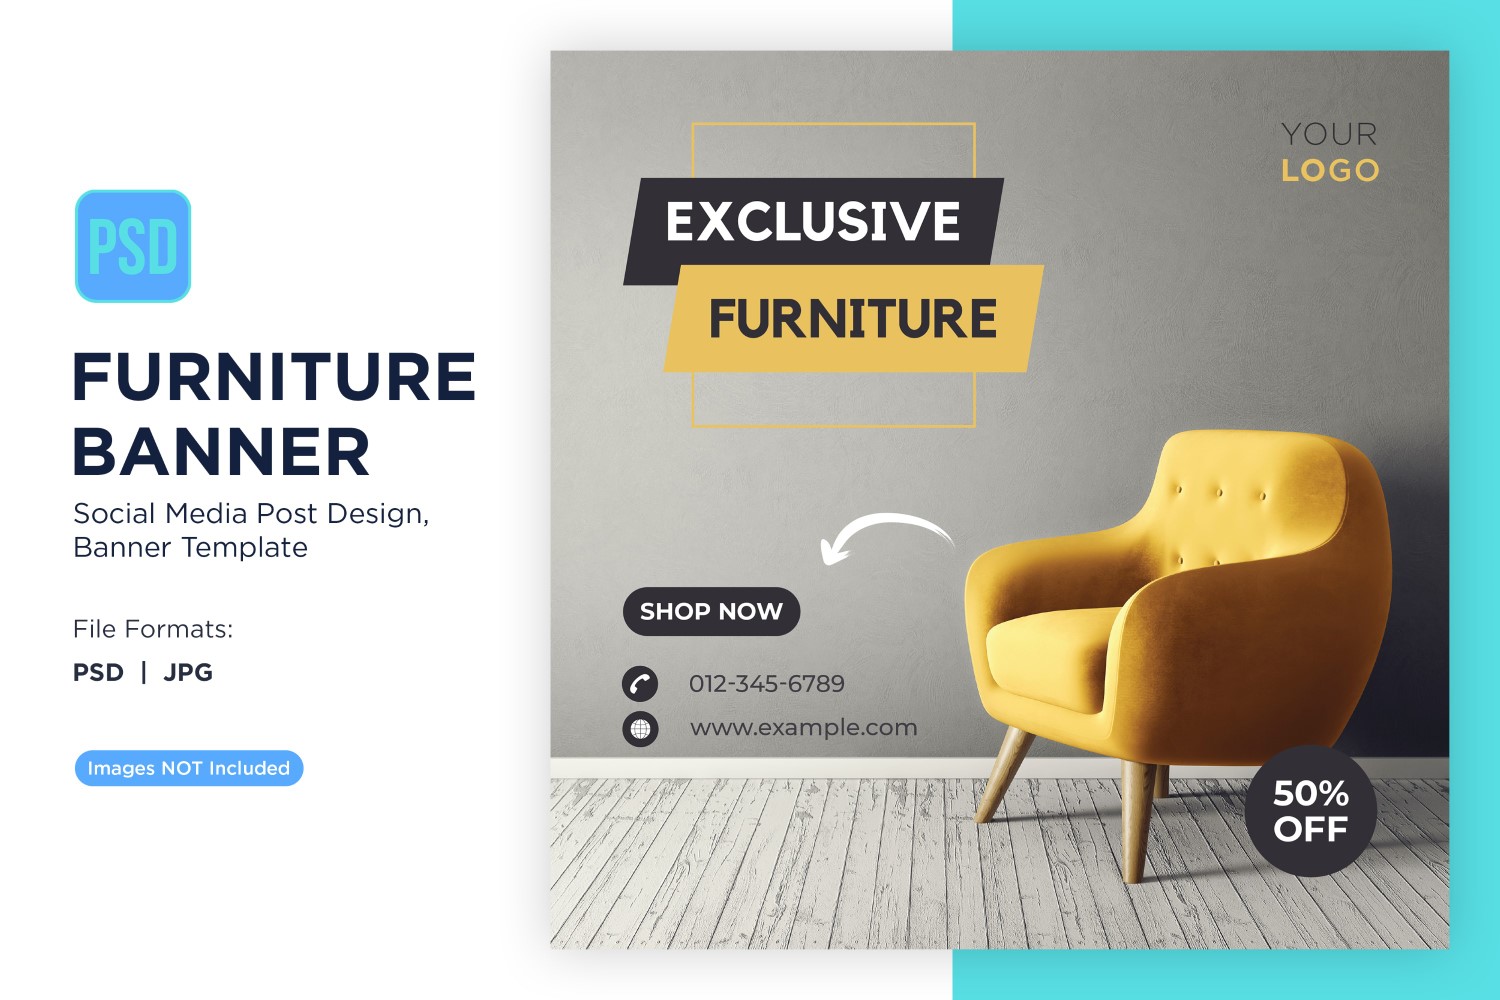 Exclusive Furniture Banner Design Template